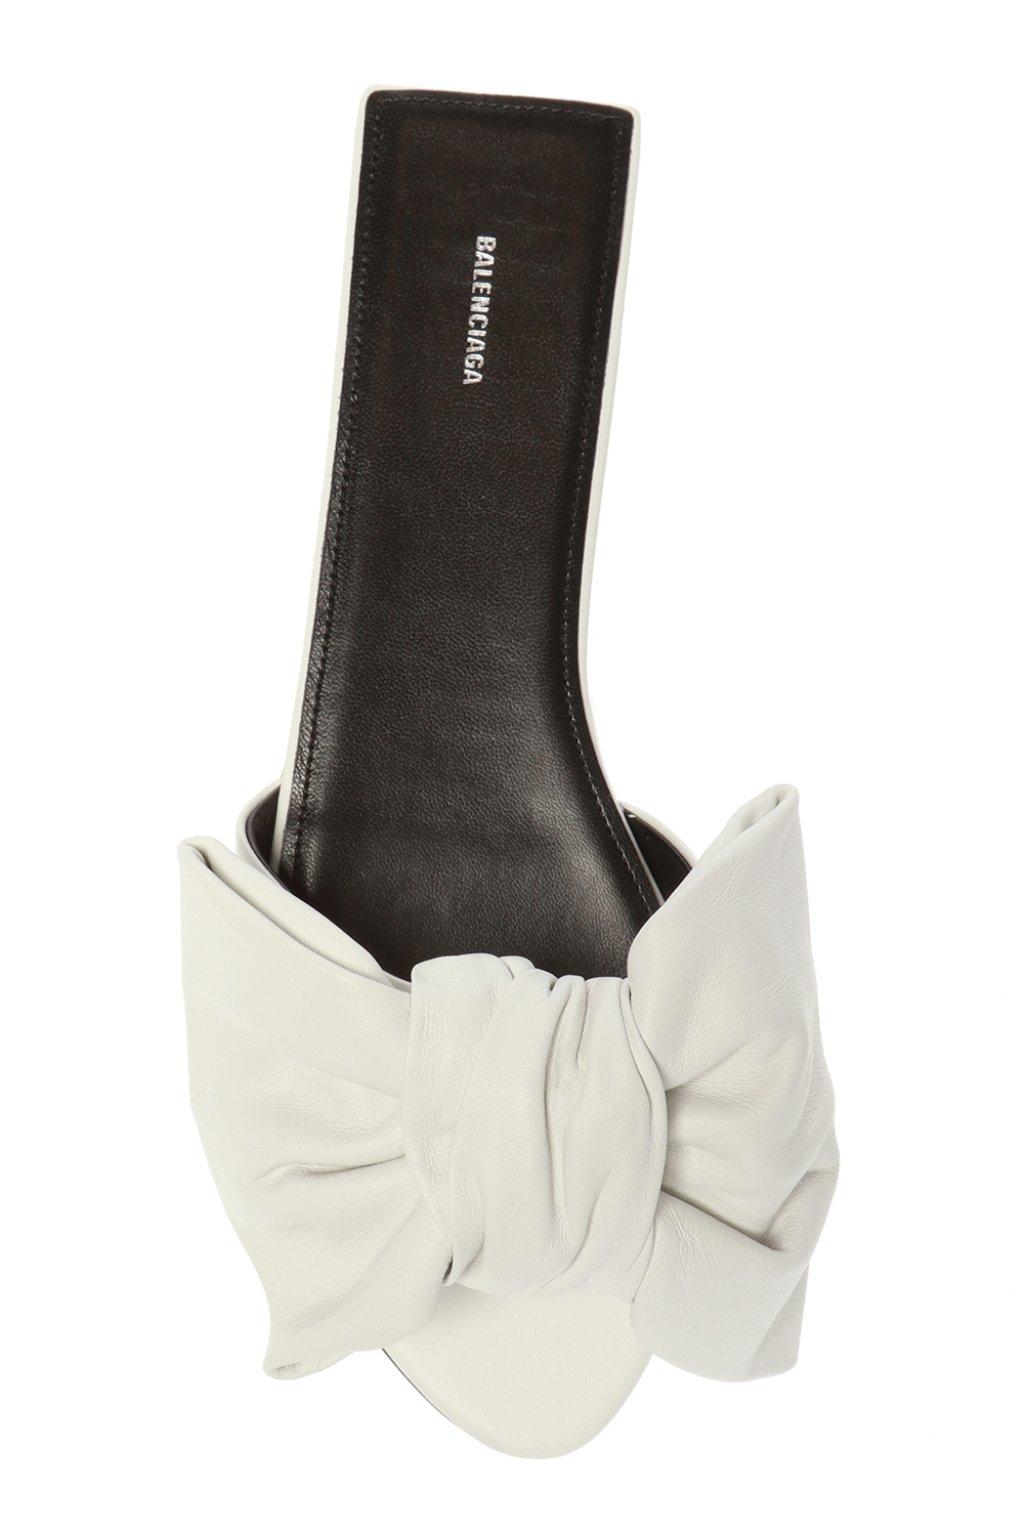 Balenciaga Leather Bow Slides in White - Lyst